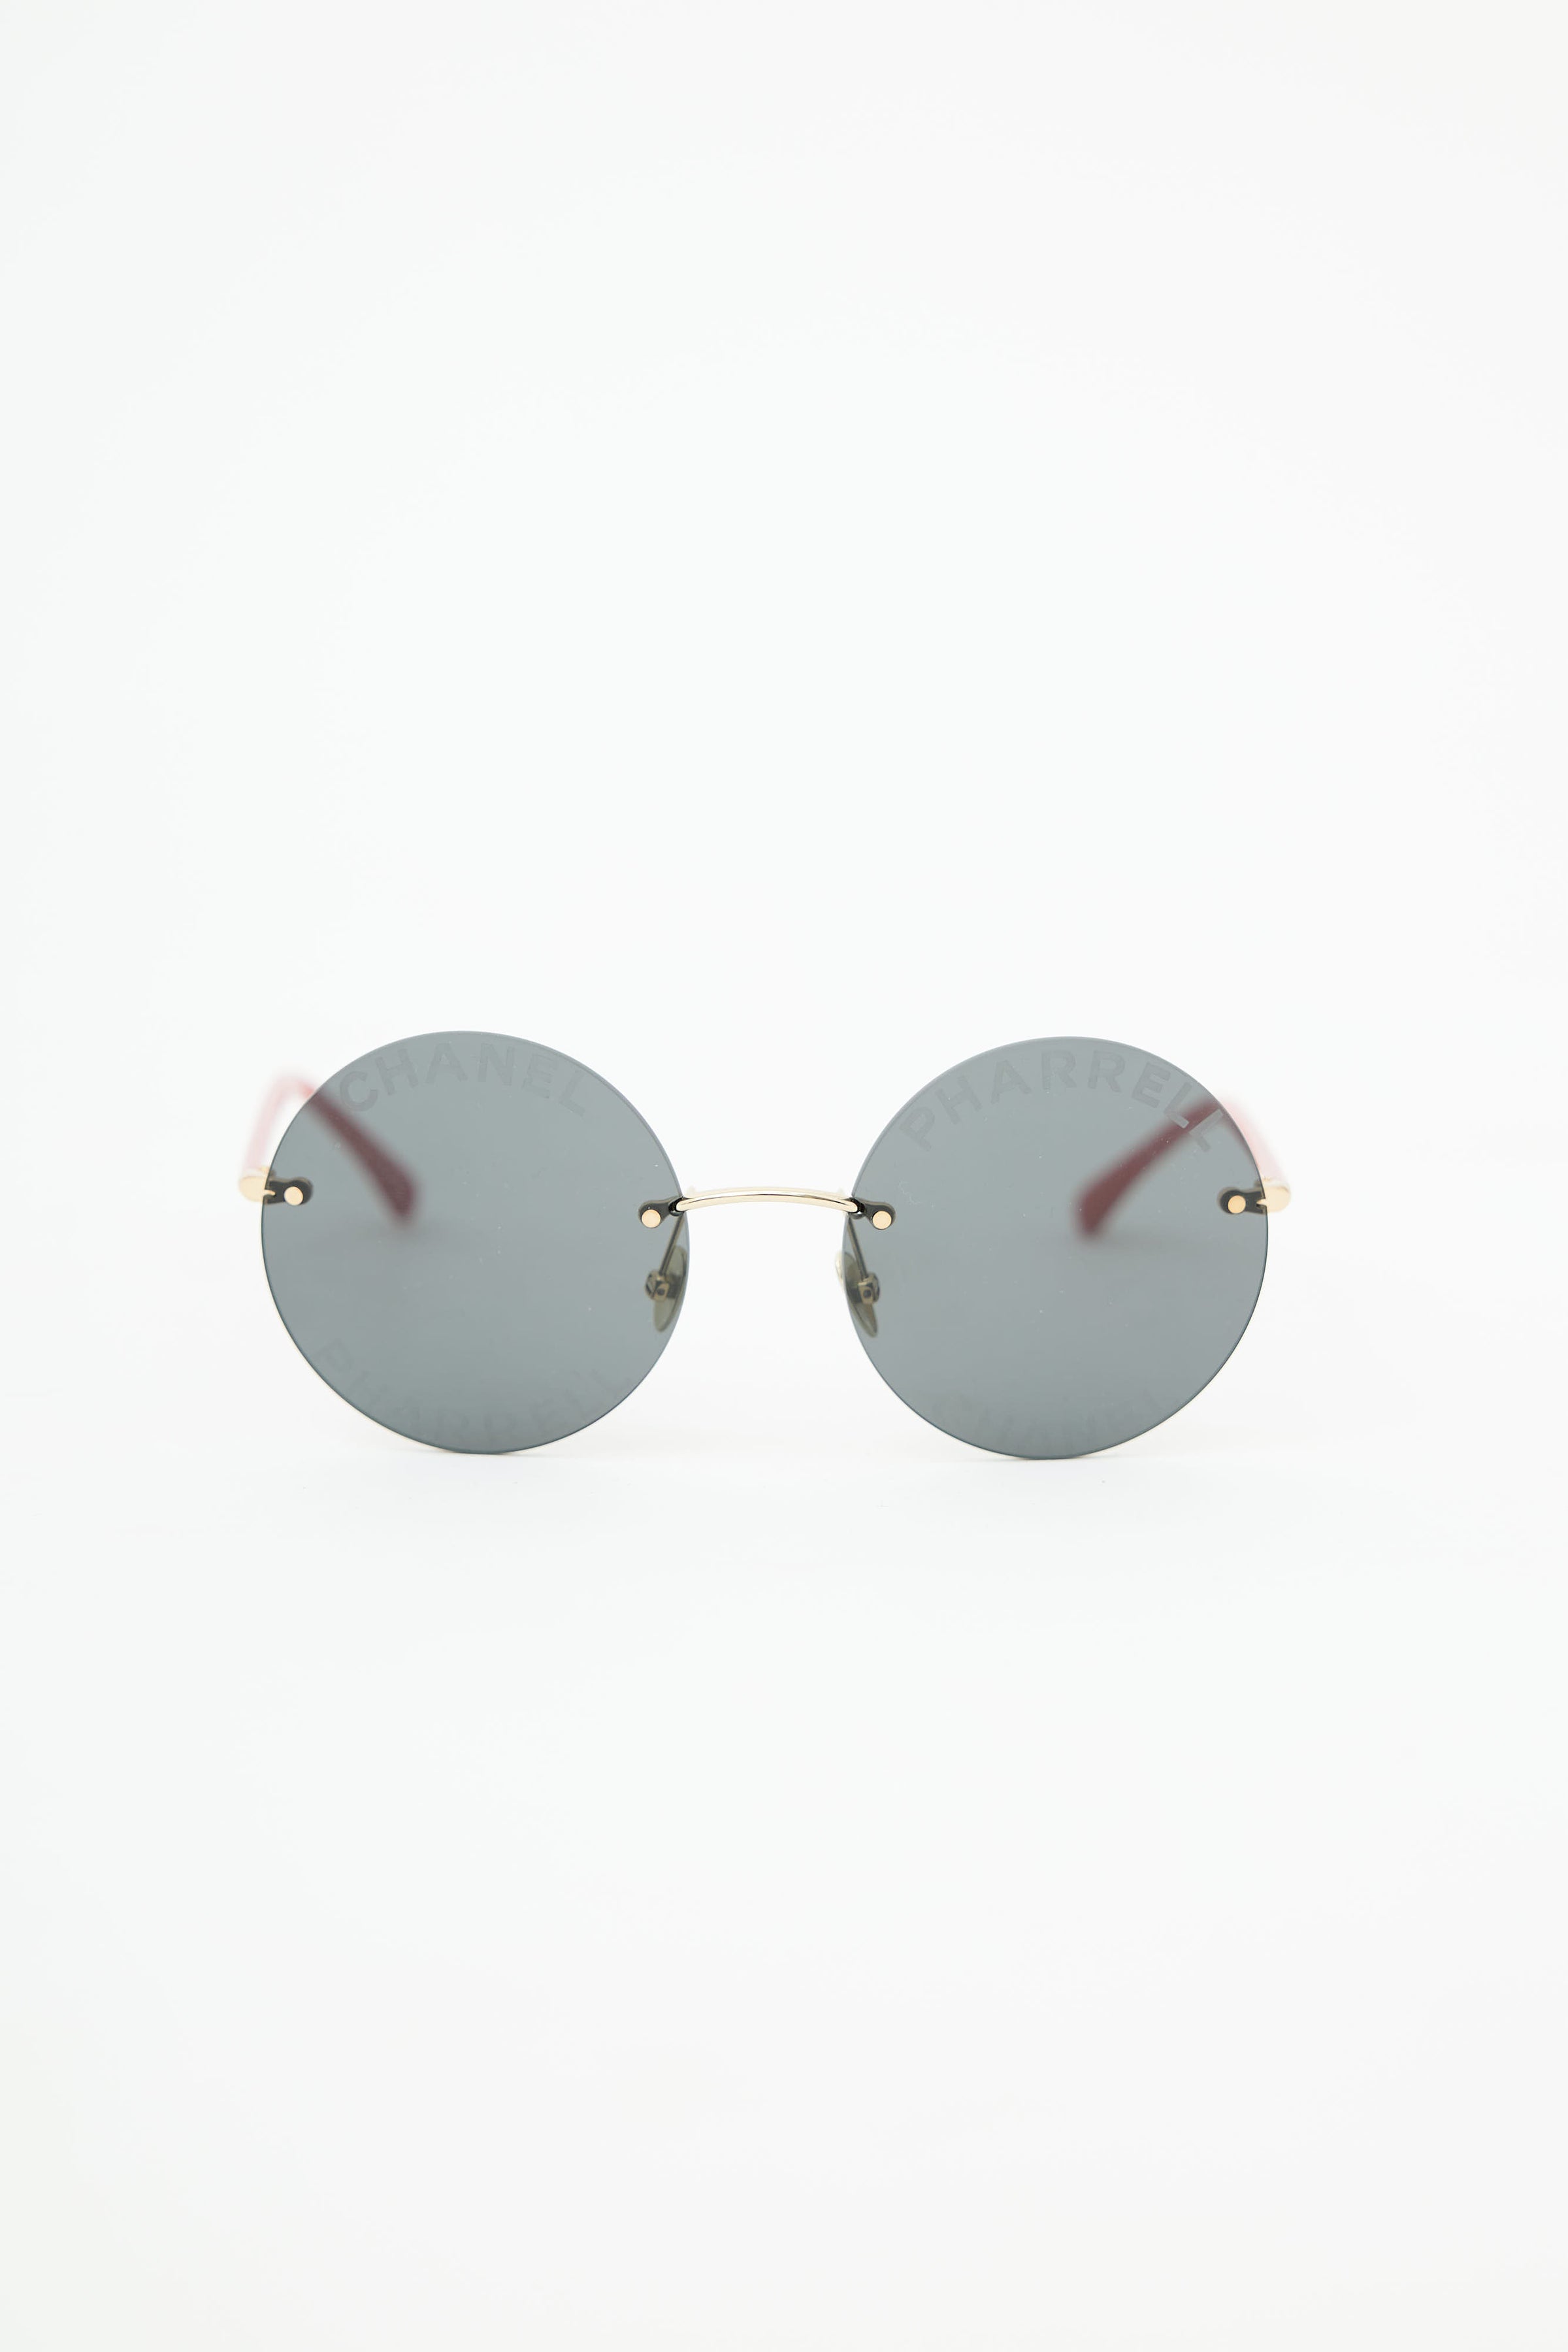 W2C Chanel x Pharrell sunglasses, any colorway! : r/DesignerReps